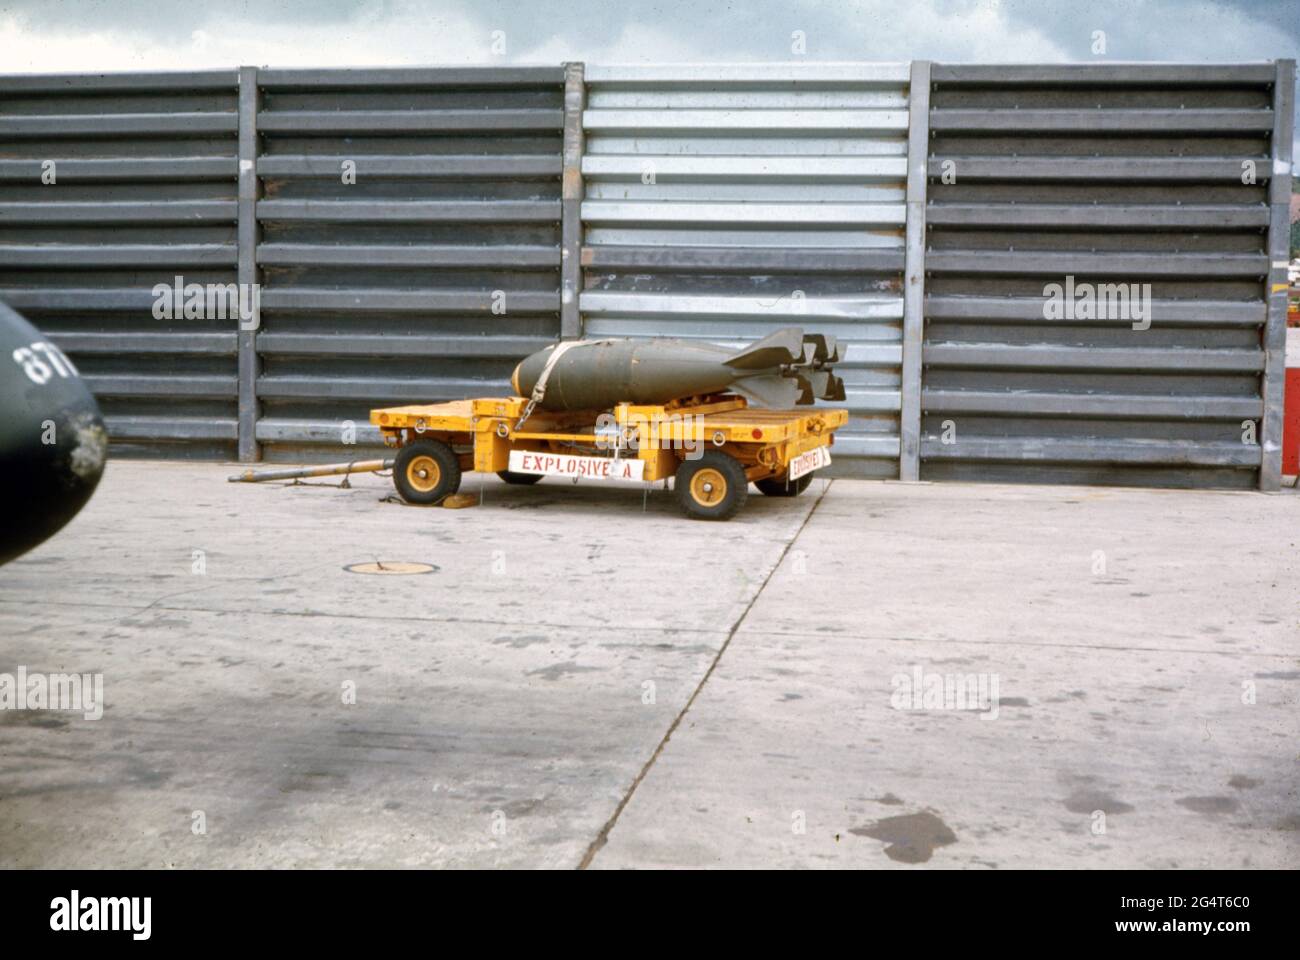 USAF United States Air Force Allzweckbombe M 117 - bomba multiuso M117 Foto Stock